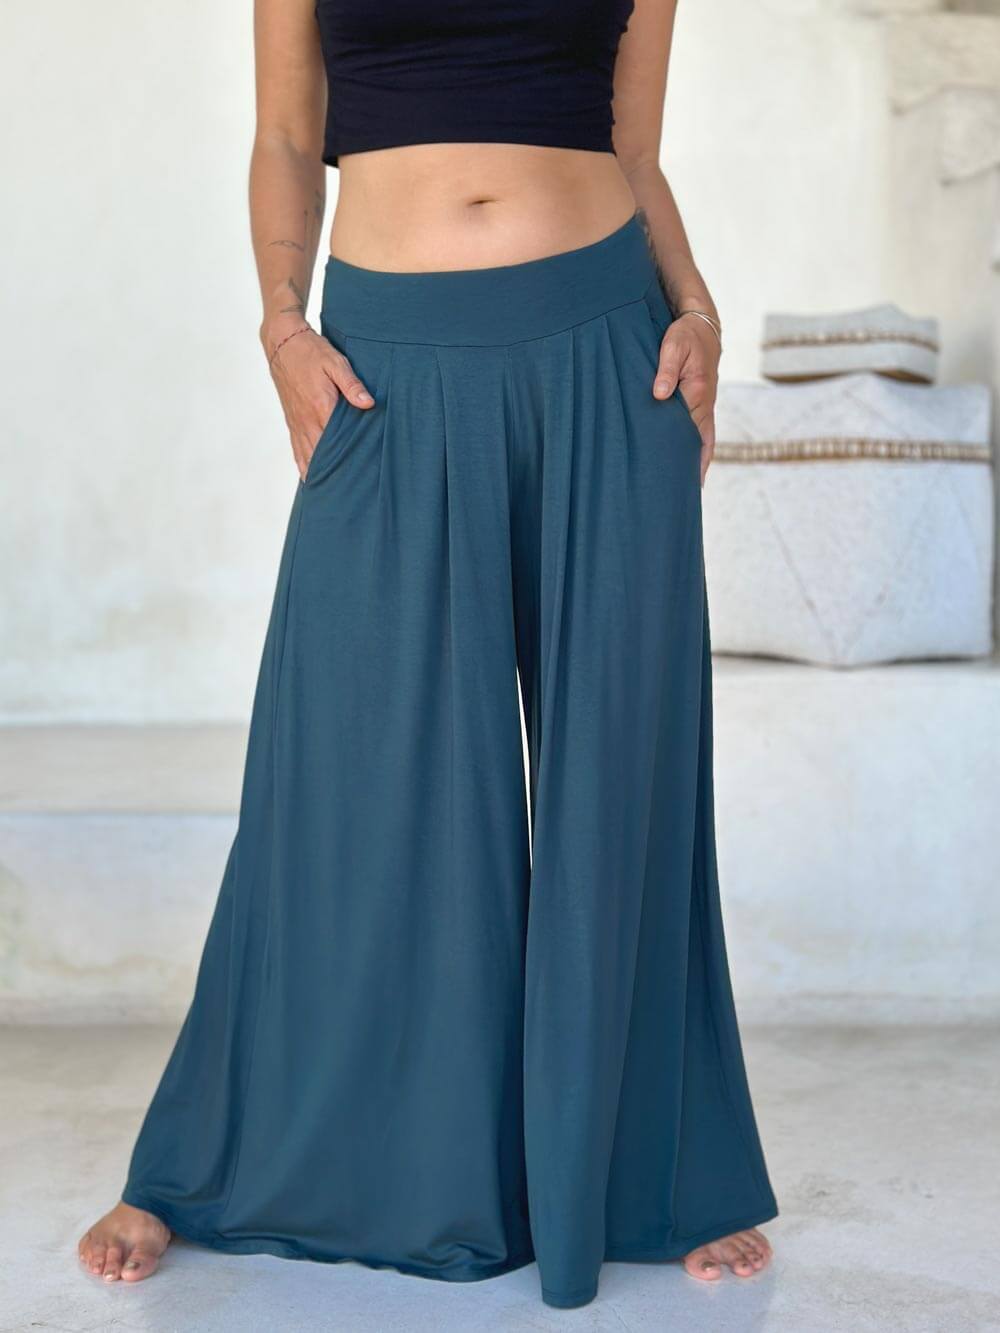 Baocc Yoga Pants Women's Casual Skirt Leggings Tennis Pants Sports Fitness  Cropped Culottes Pants for Women Blue 